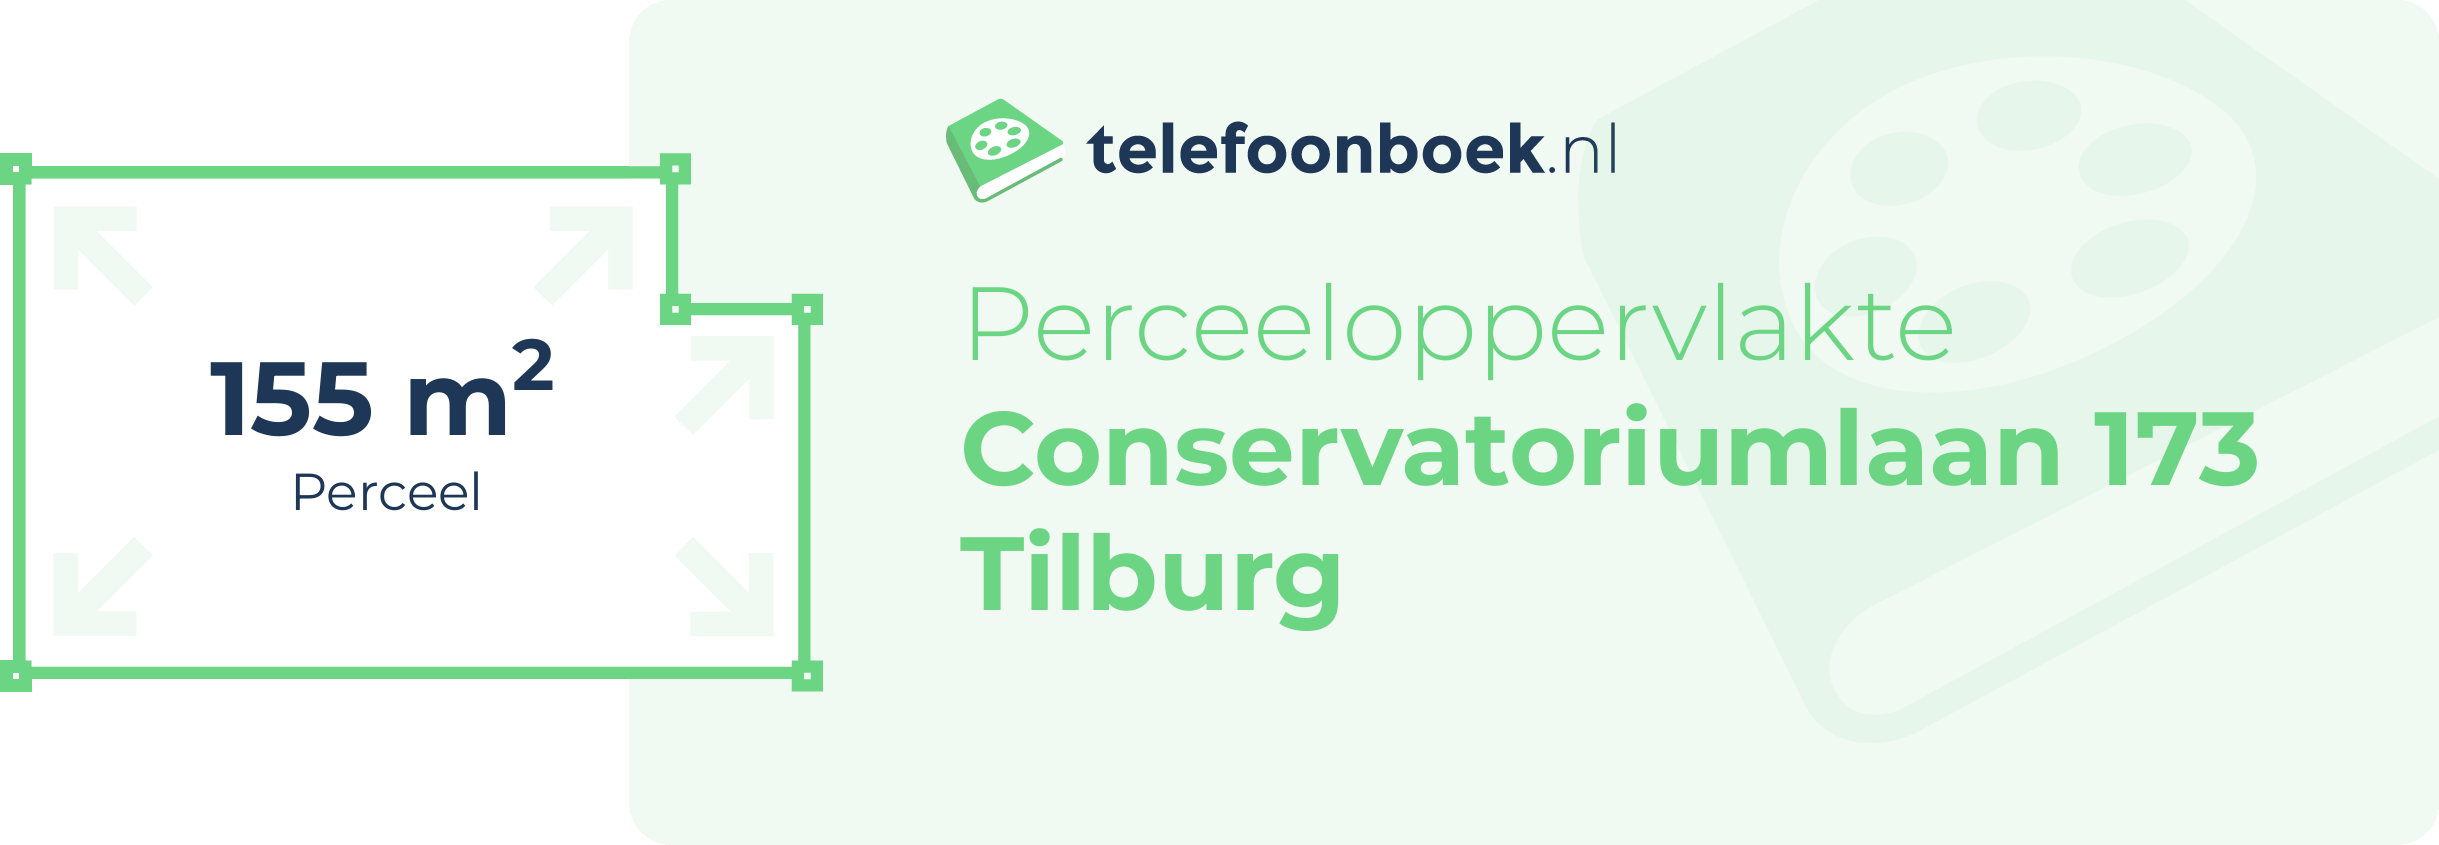 Perceeloppervlakte Conservatoriumlaan 173 Tilburg